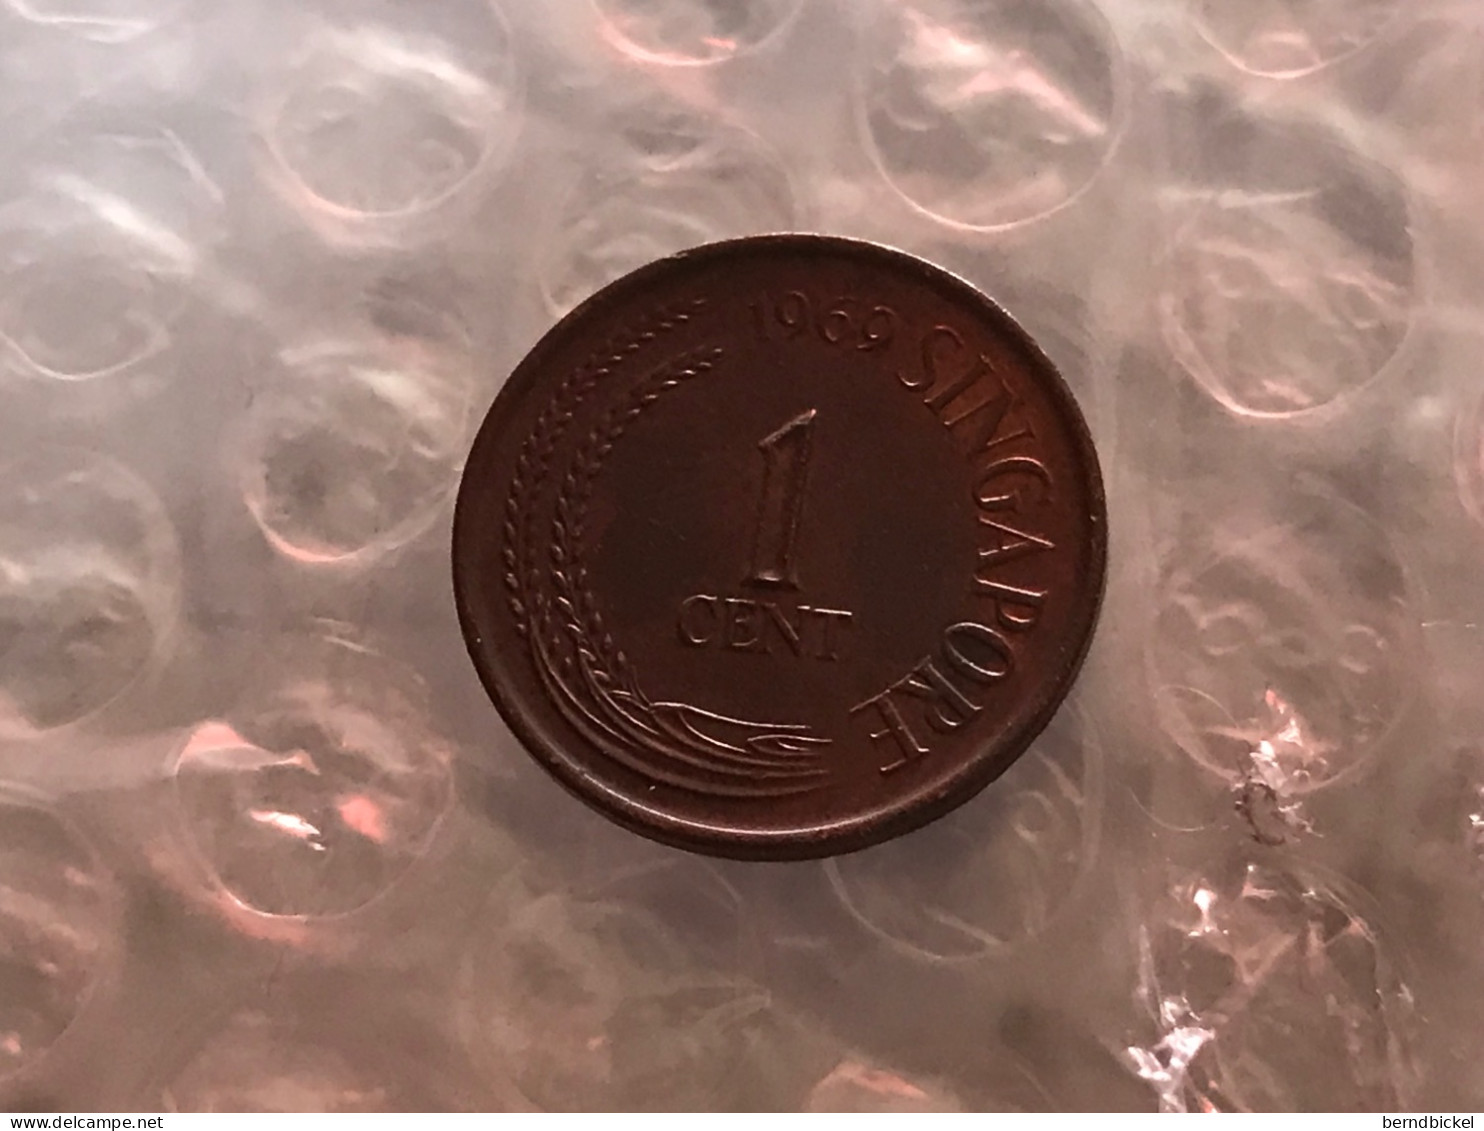 Münze Münzen Umlaufmünze Singapur 1 Cent 1969 - Singapour